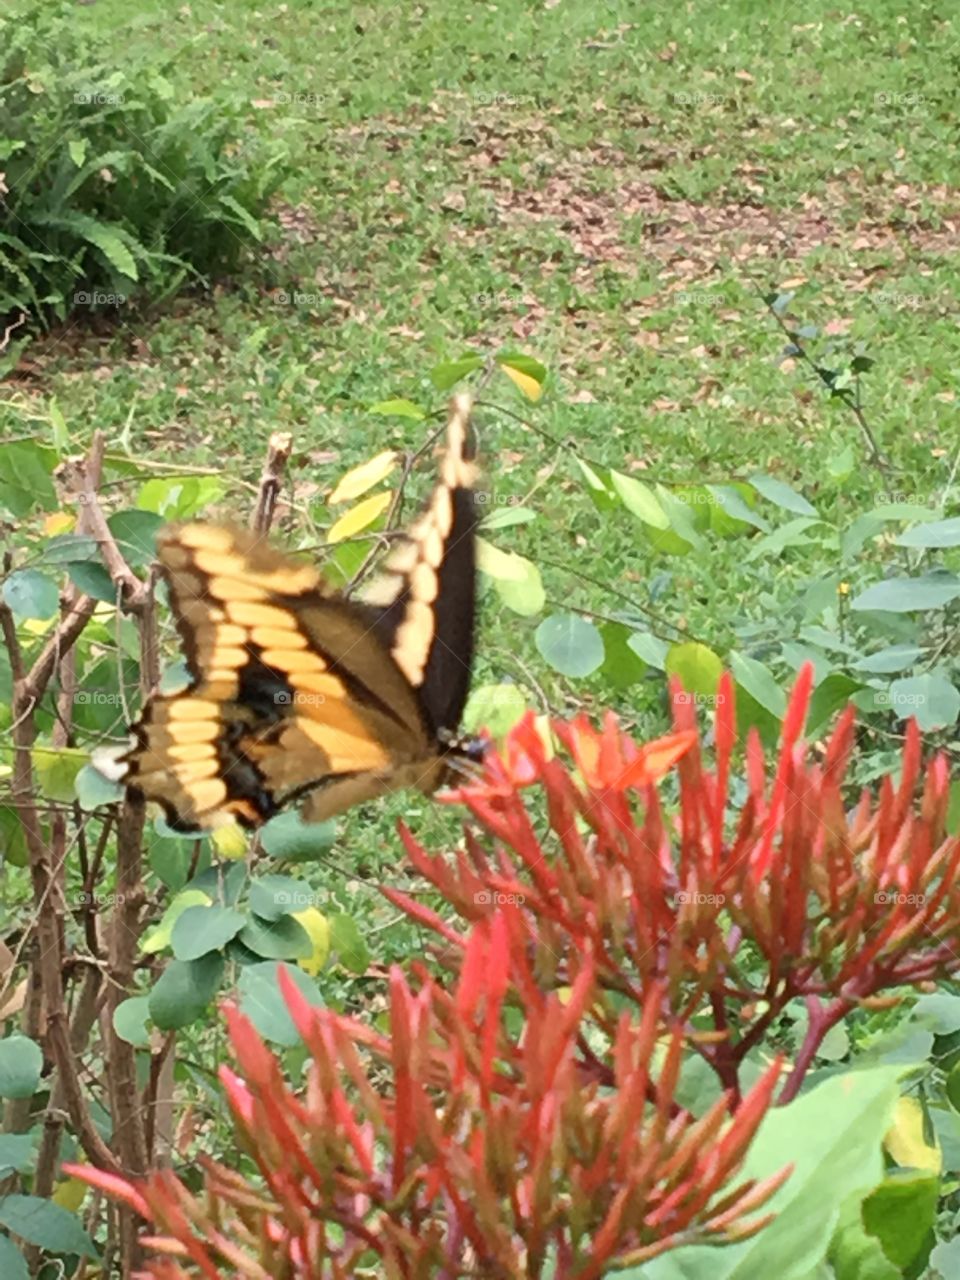 Tiger swallowtail butterfly on flower